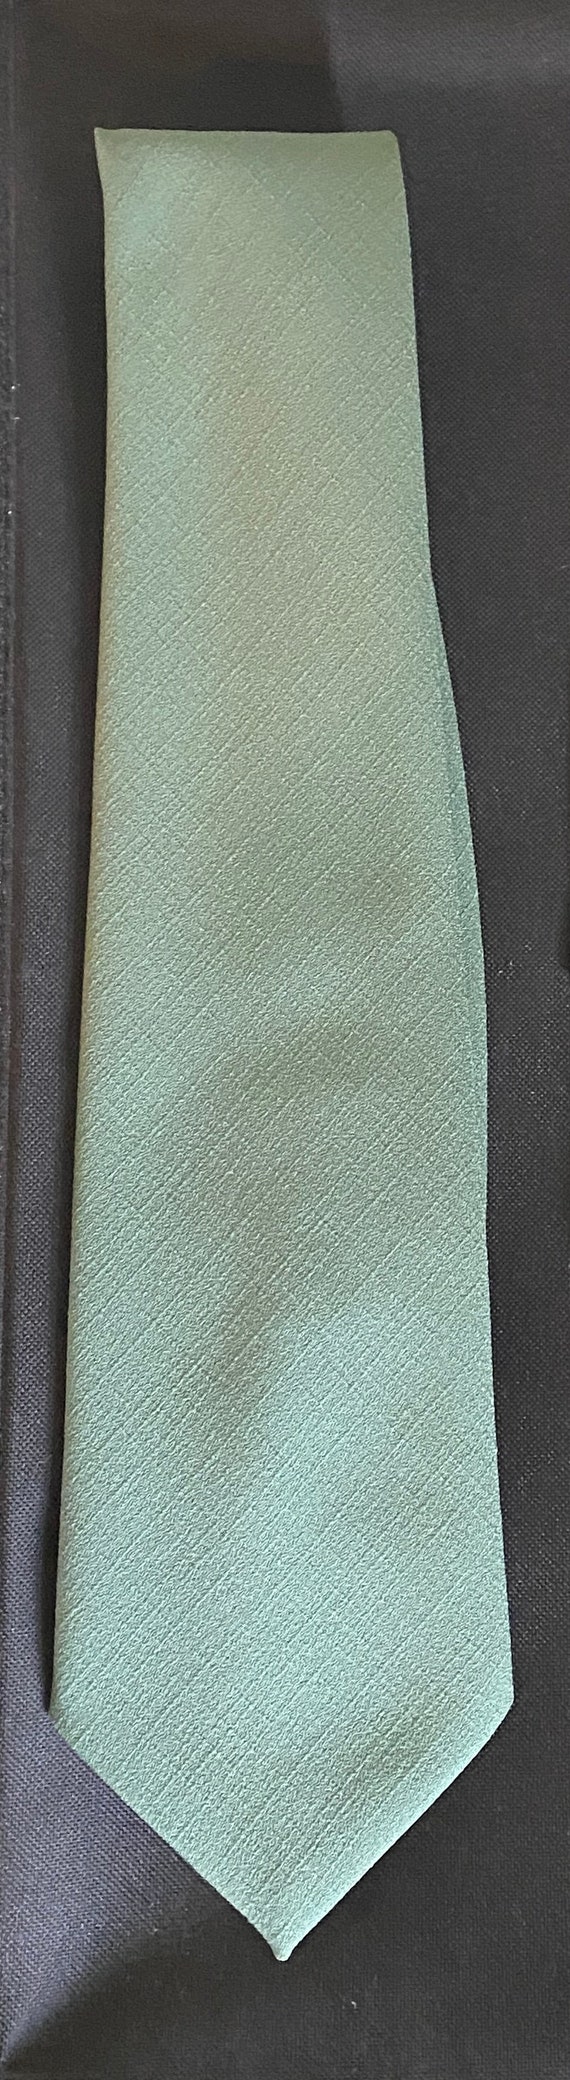 Sage Green Necktie, Golden Clasp by Prince Consort